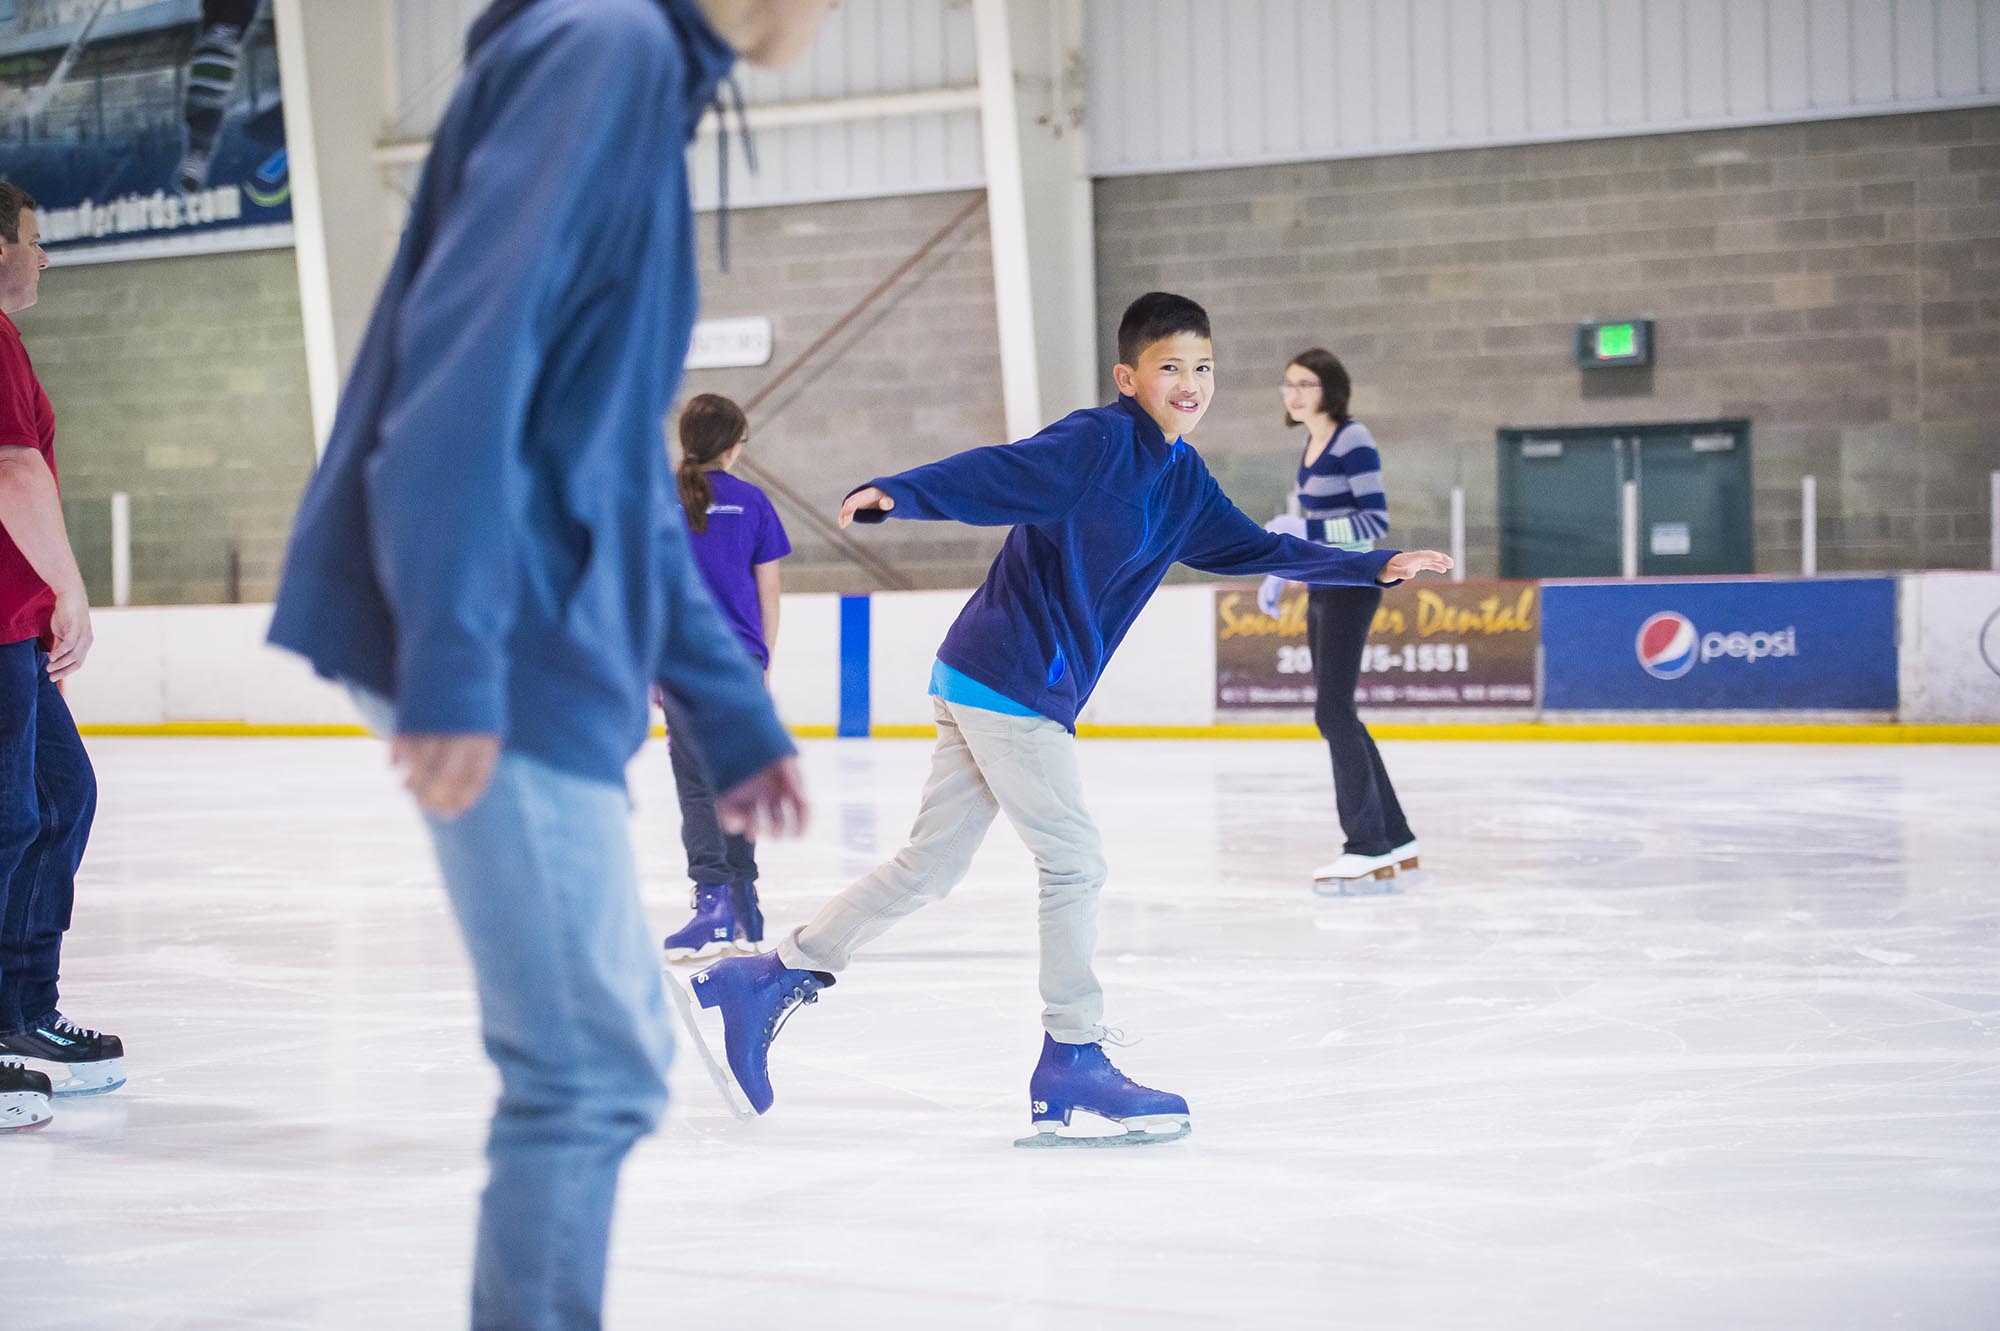 Ice skating at Kent Valley Ice Centre in Kent, Washington